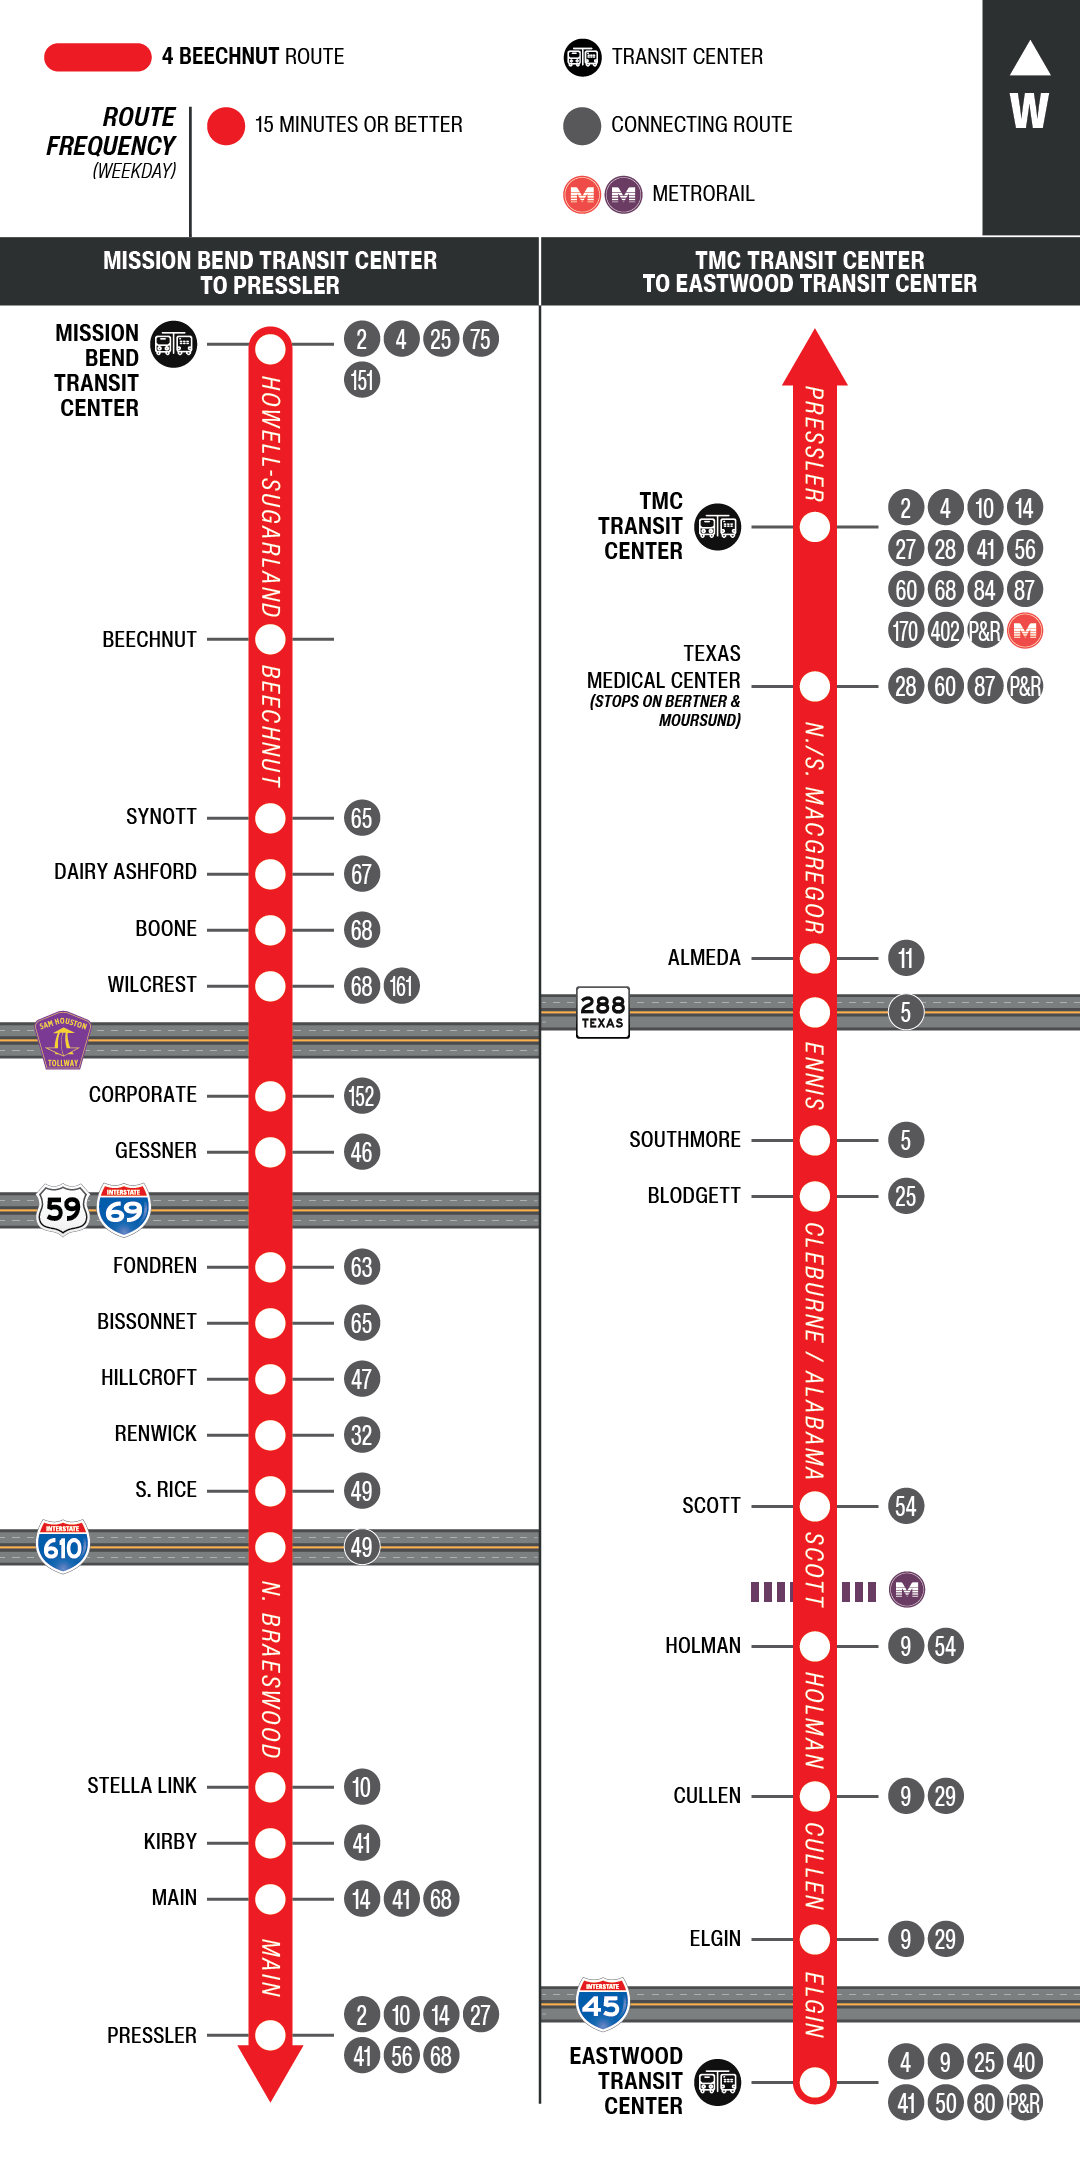 Route map for 4 Beechnut bus